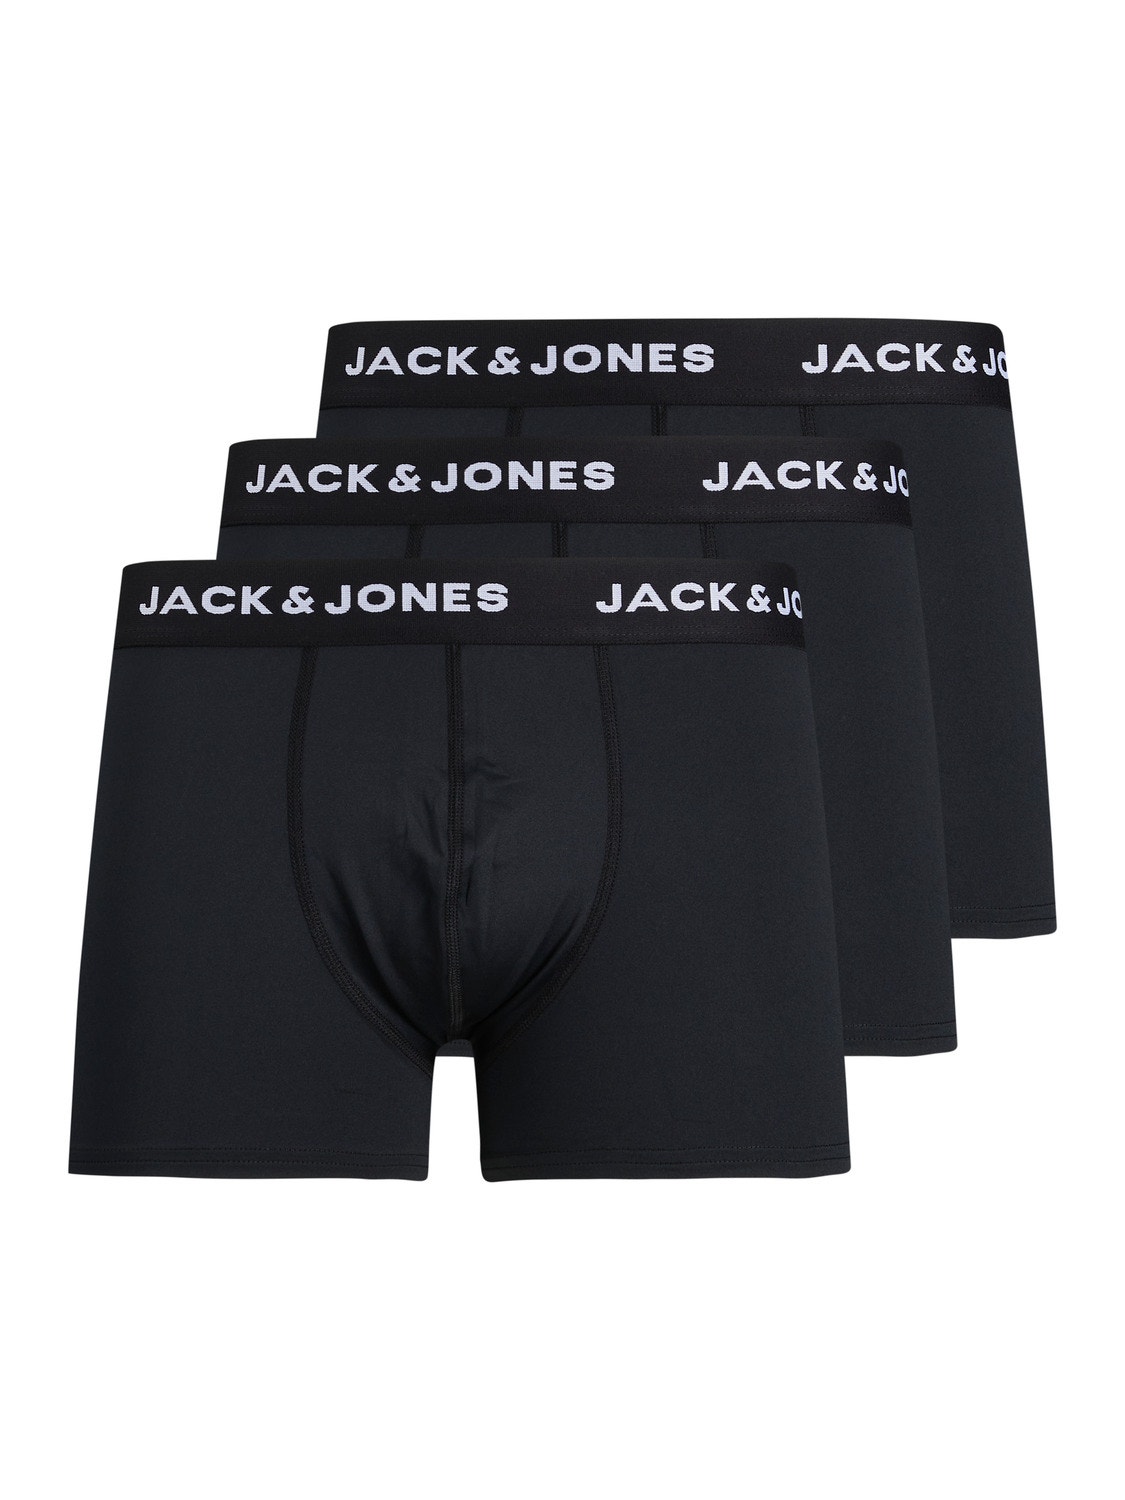 JACK & JONES Jack & Jones JERRY - Jersey hombre black - Private Sport Shop